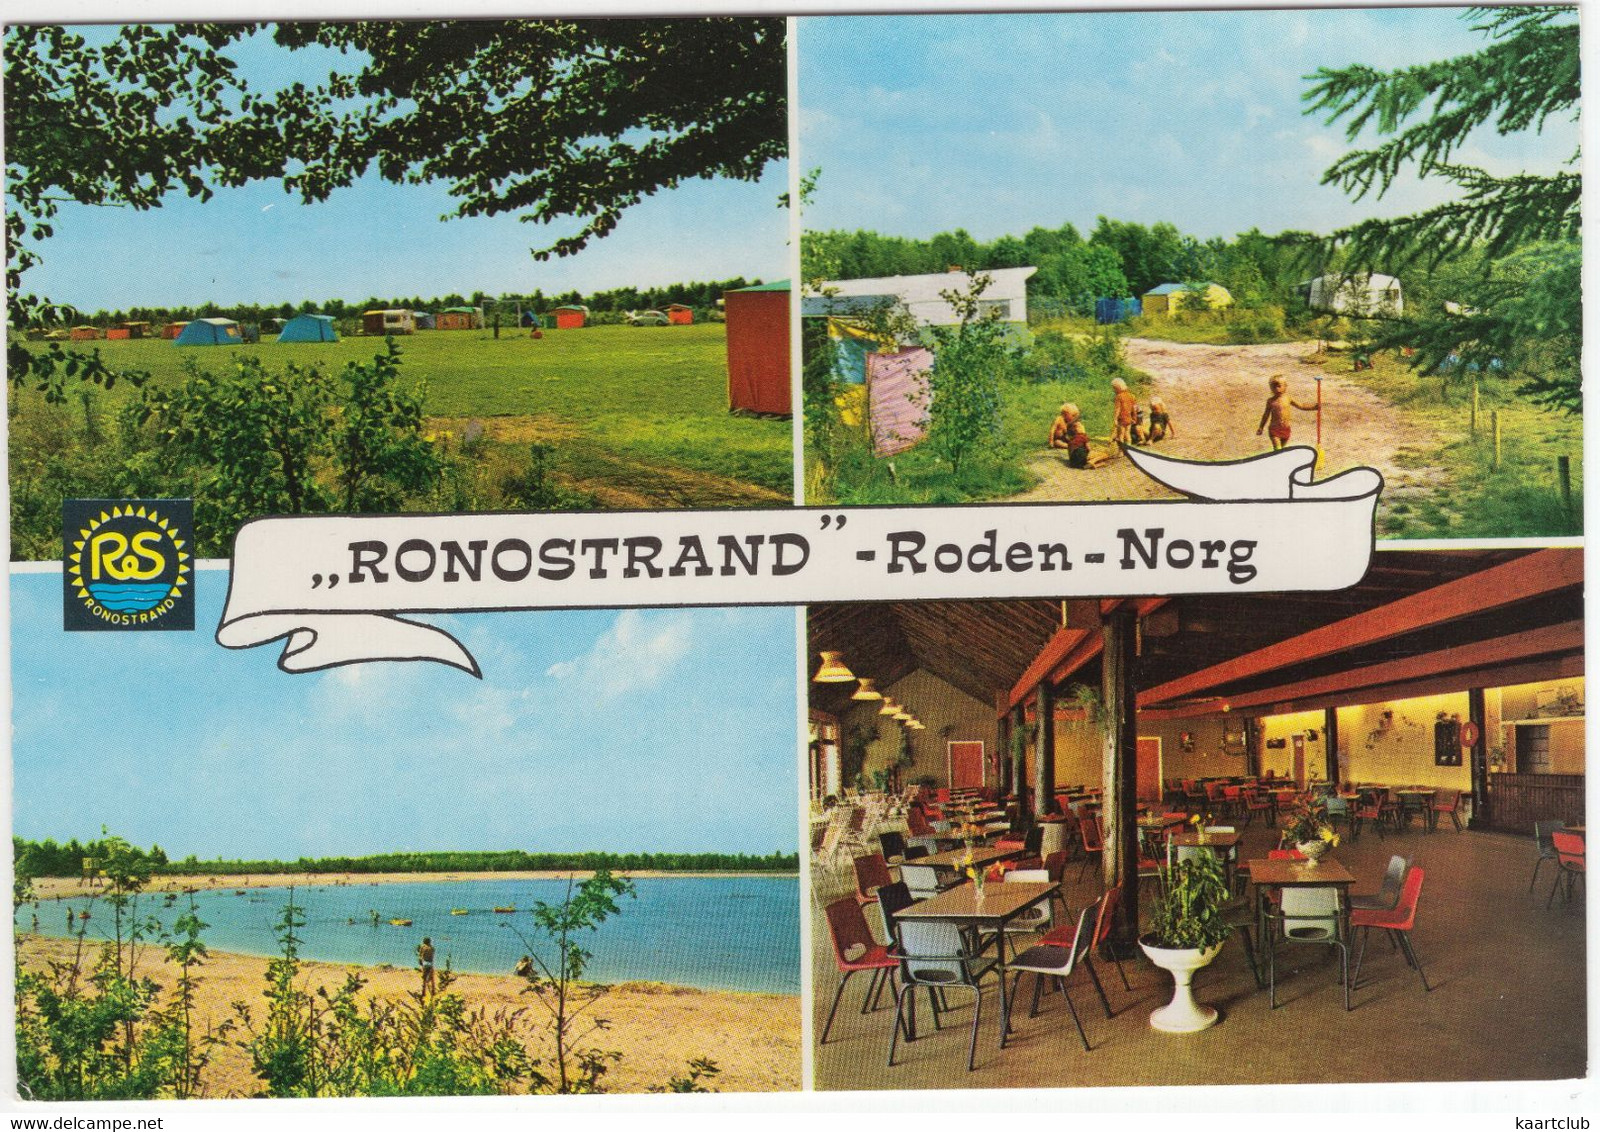 'RONOSTRAND' - Roden - Een, Gem. Norg: 35 Ha. Water, Strand, Zonneweide En Camping - Amerika 12 - (Drenthe, Nederland) - Norg